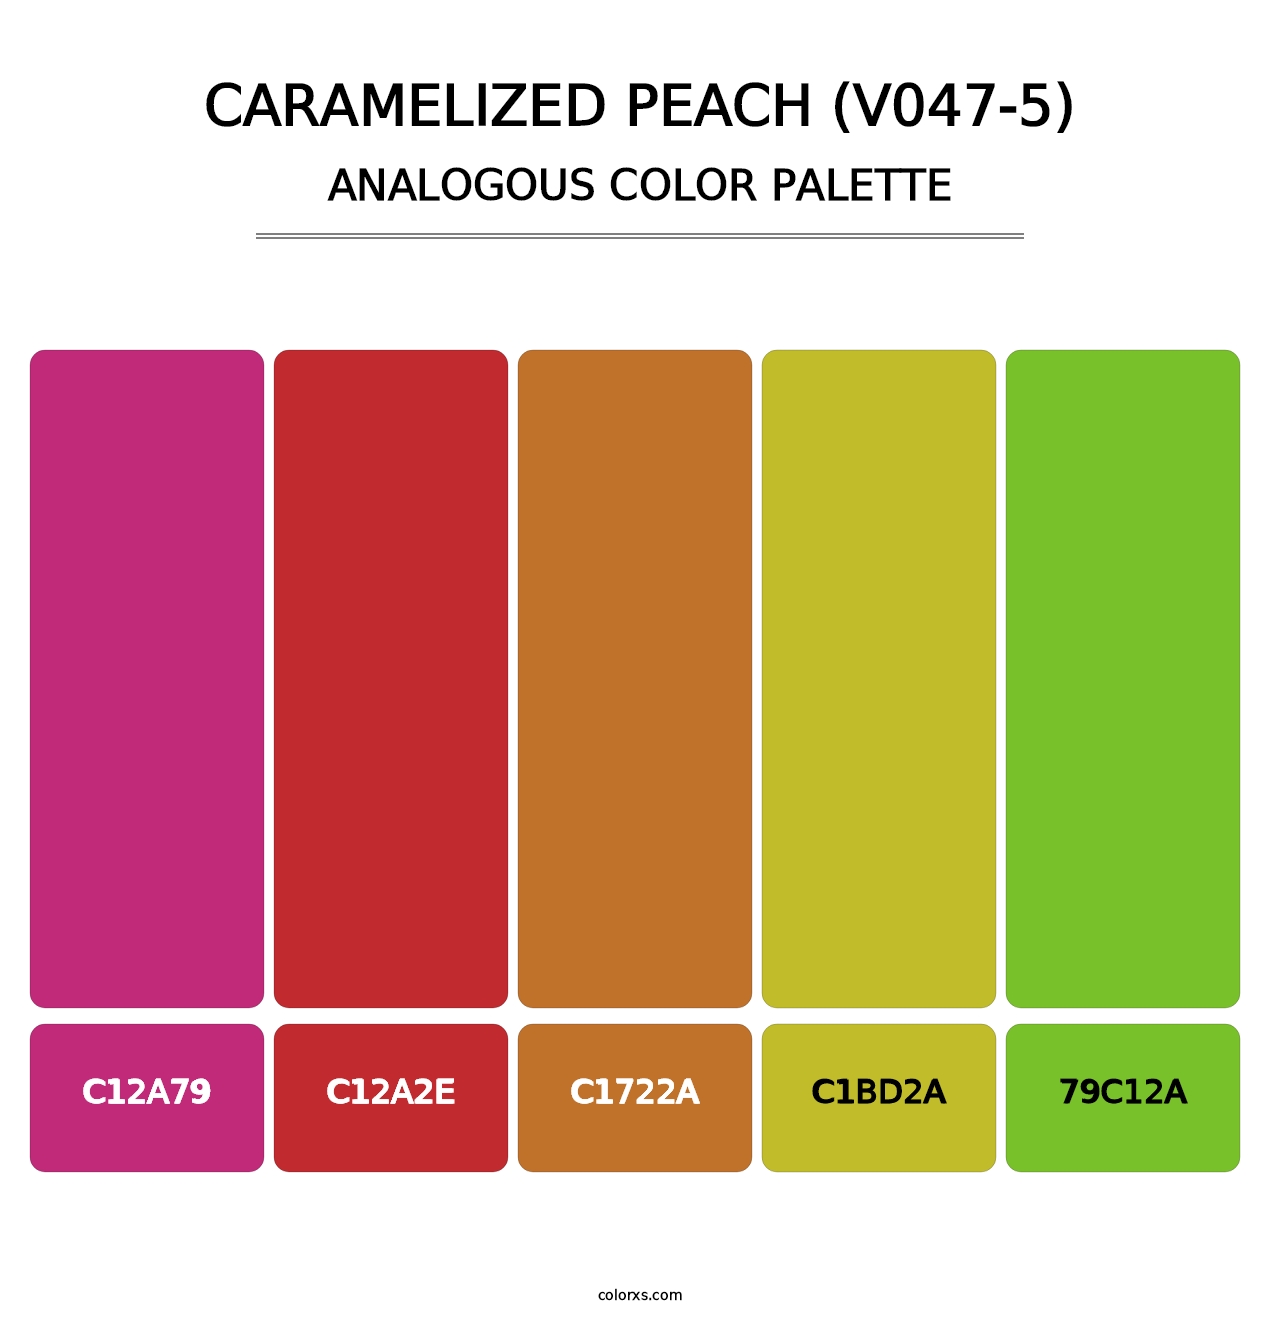 Caramelized Peach (V047-5) - Analogous Color Palette